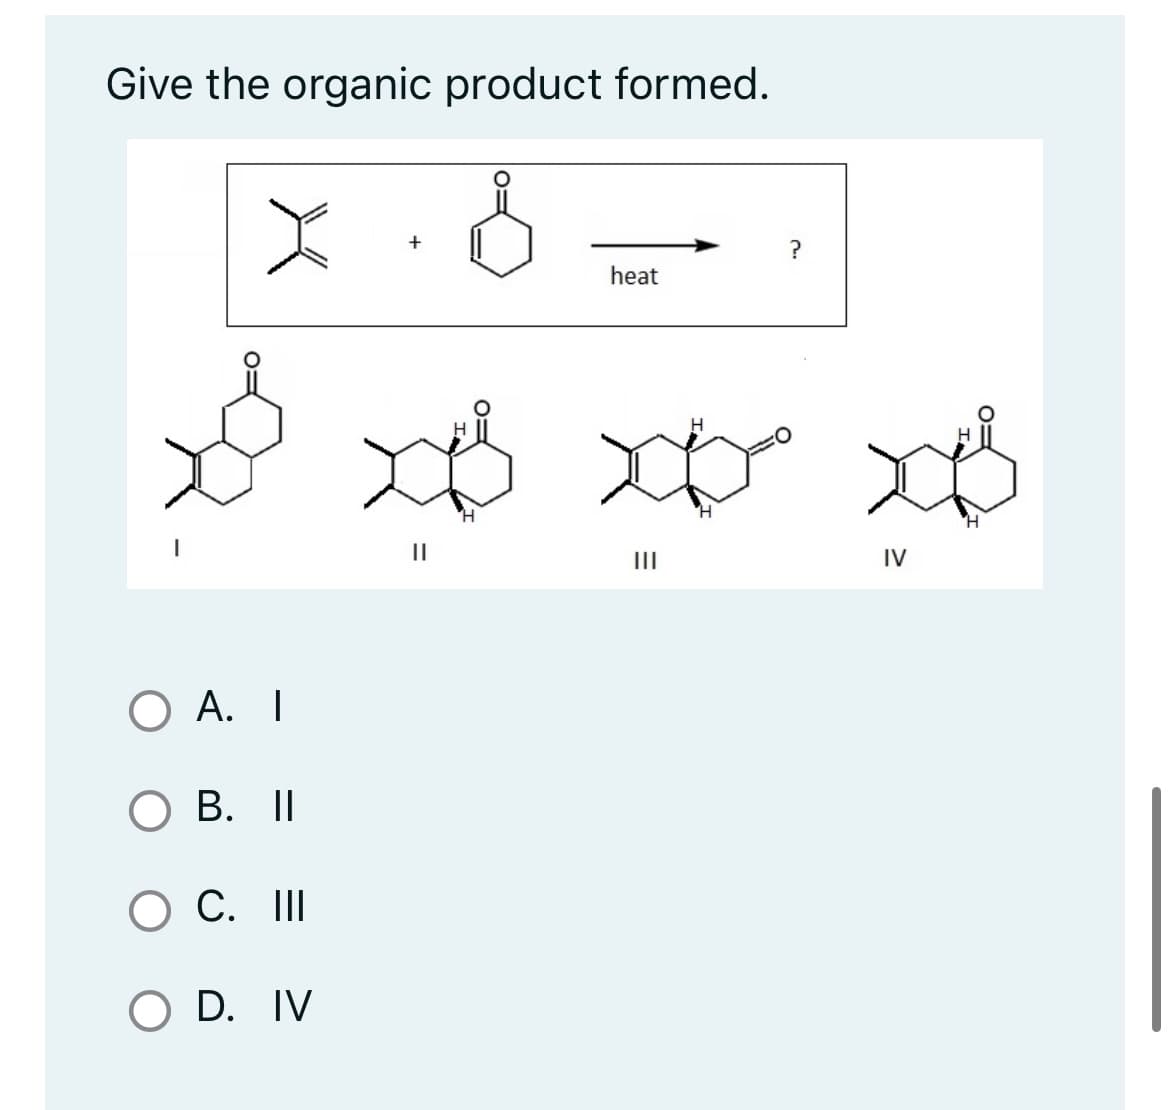 Give the organic product formed.
x. d
OA. I
OB. II
O C. III
O D. IV
heat
11
H
H
x x xB
H
?
|||
IV